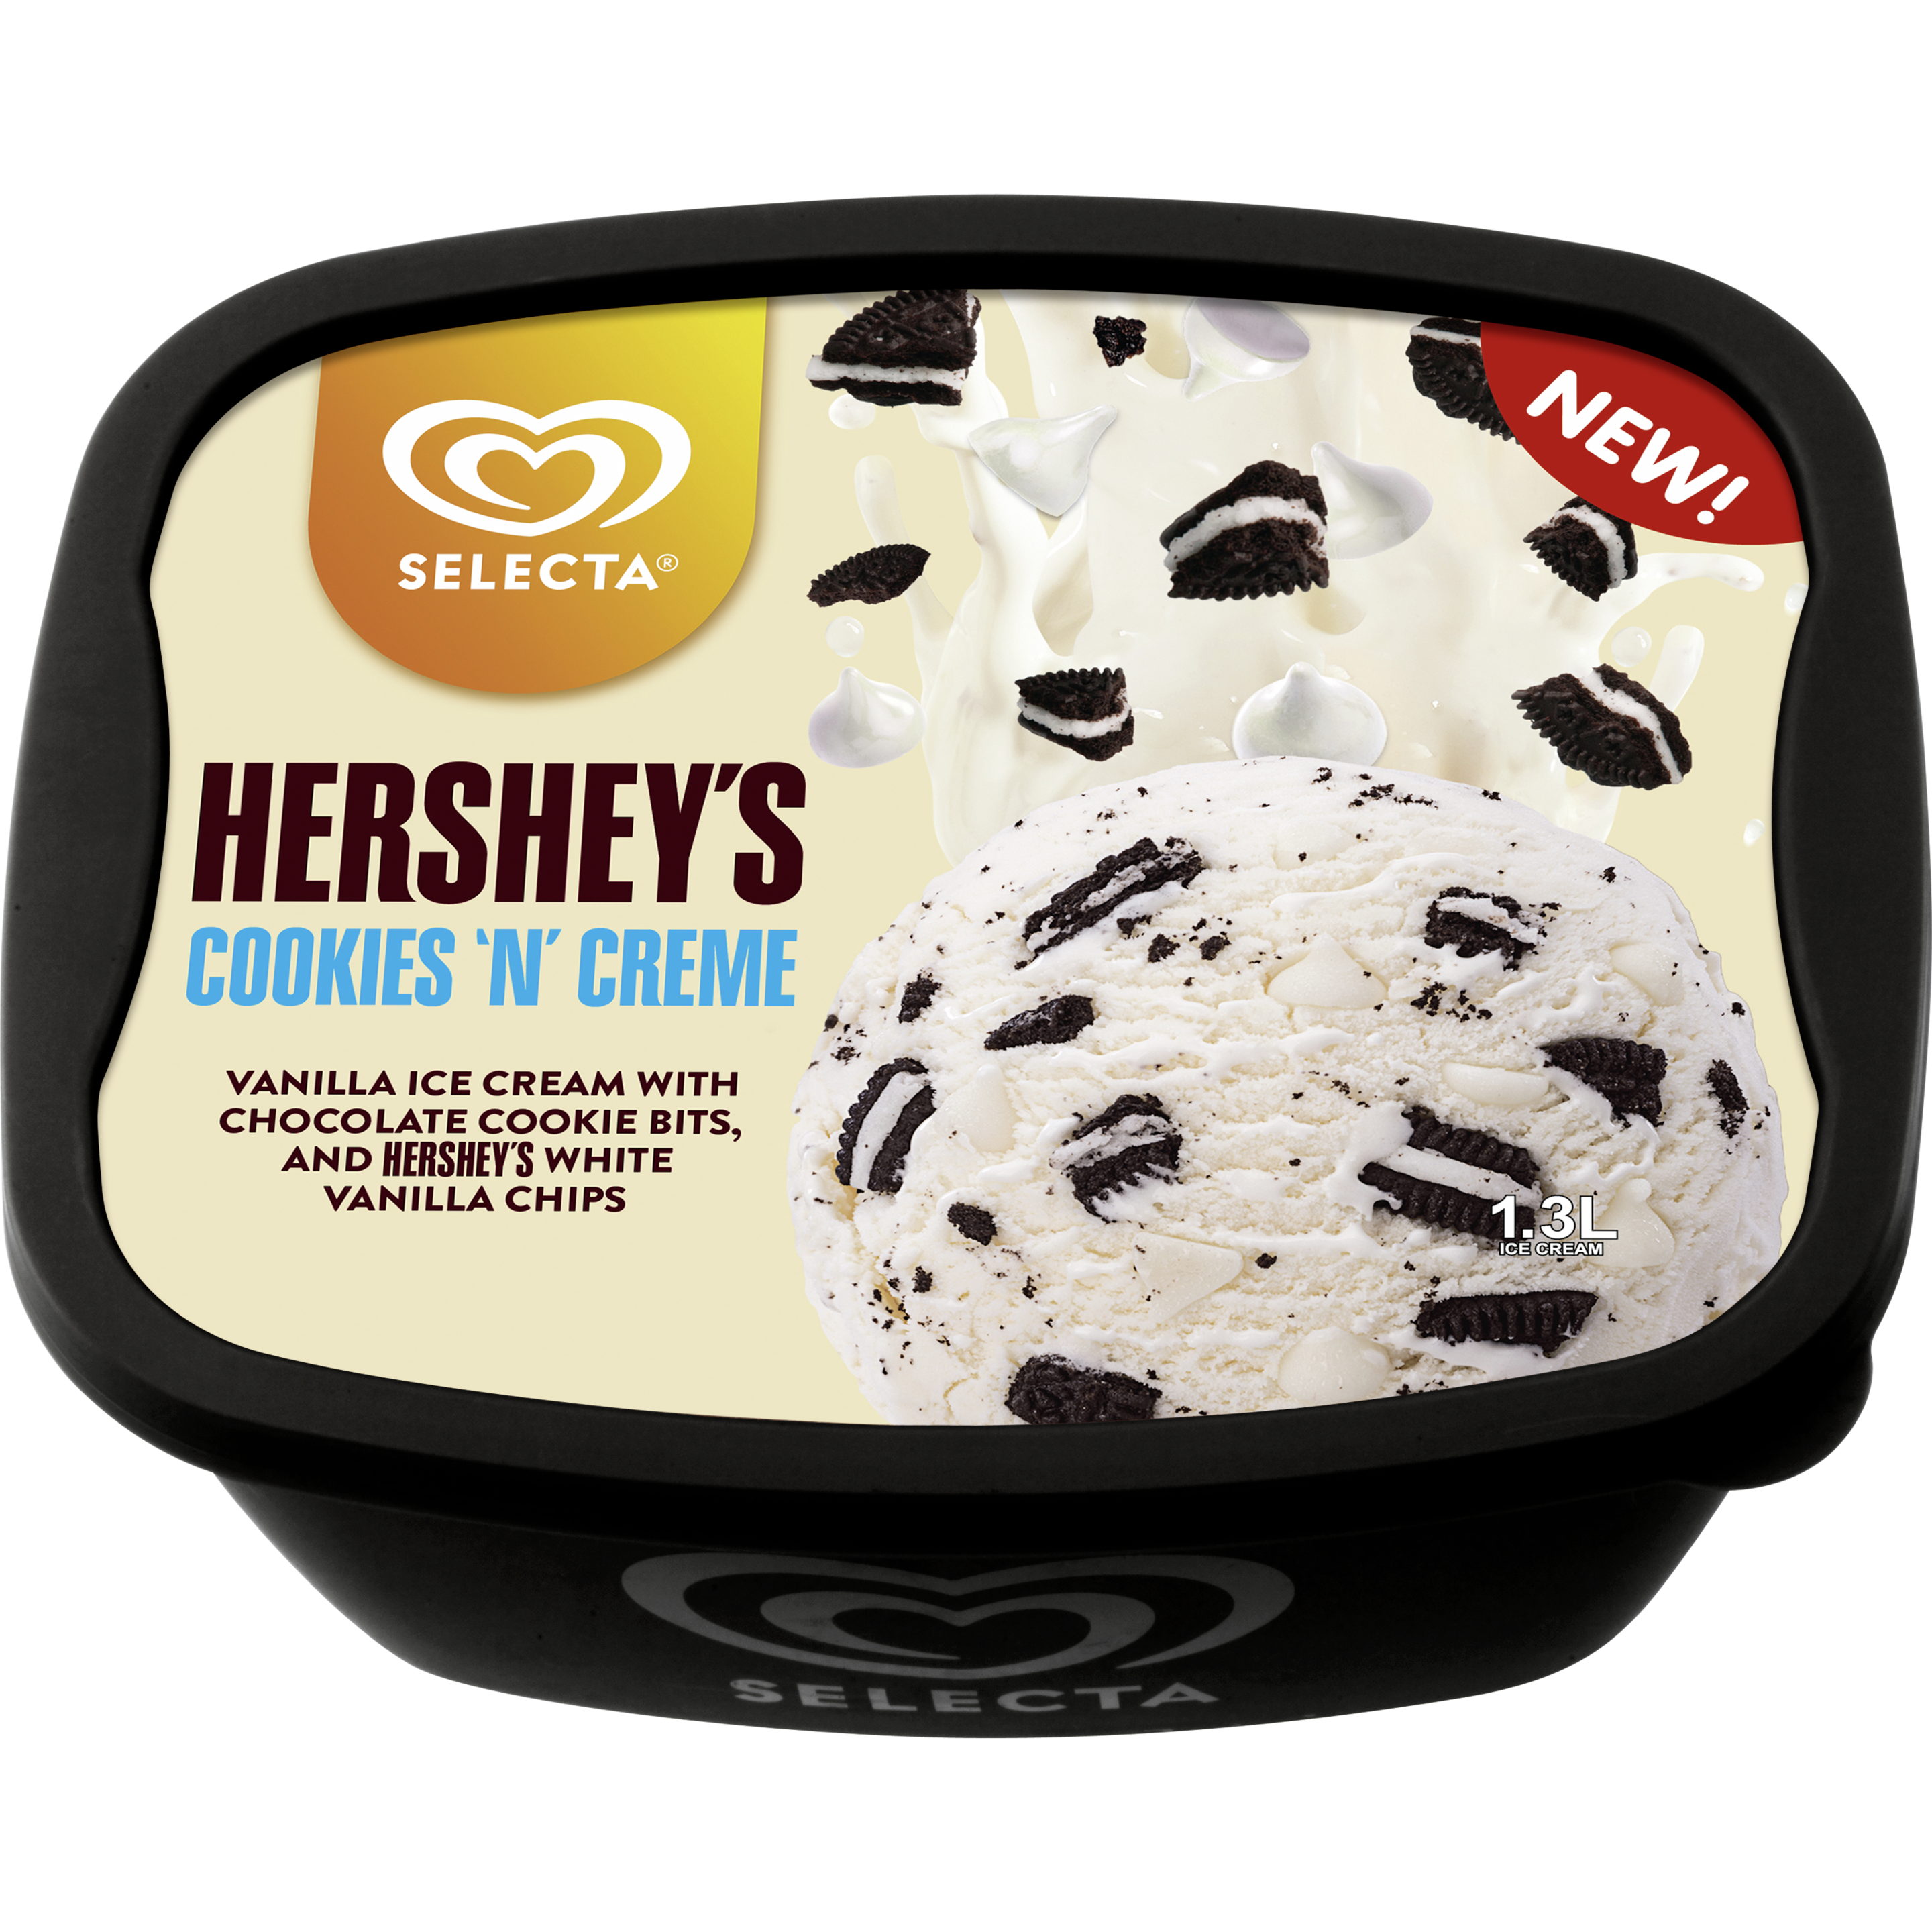 Selecta HERSHEY’S Cookies ‘N’ Cream Ice Cream